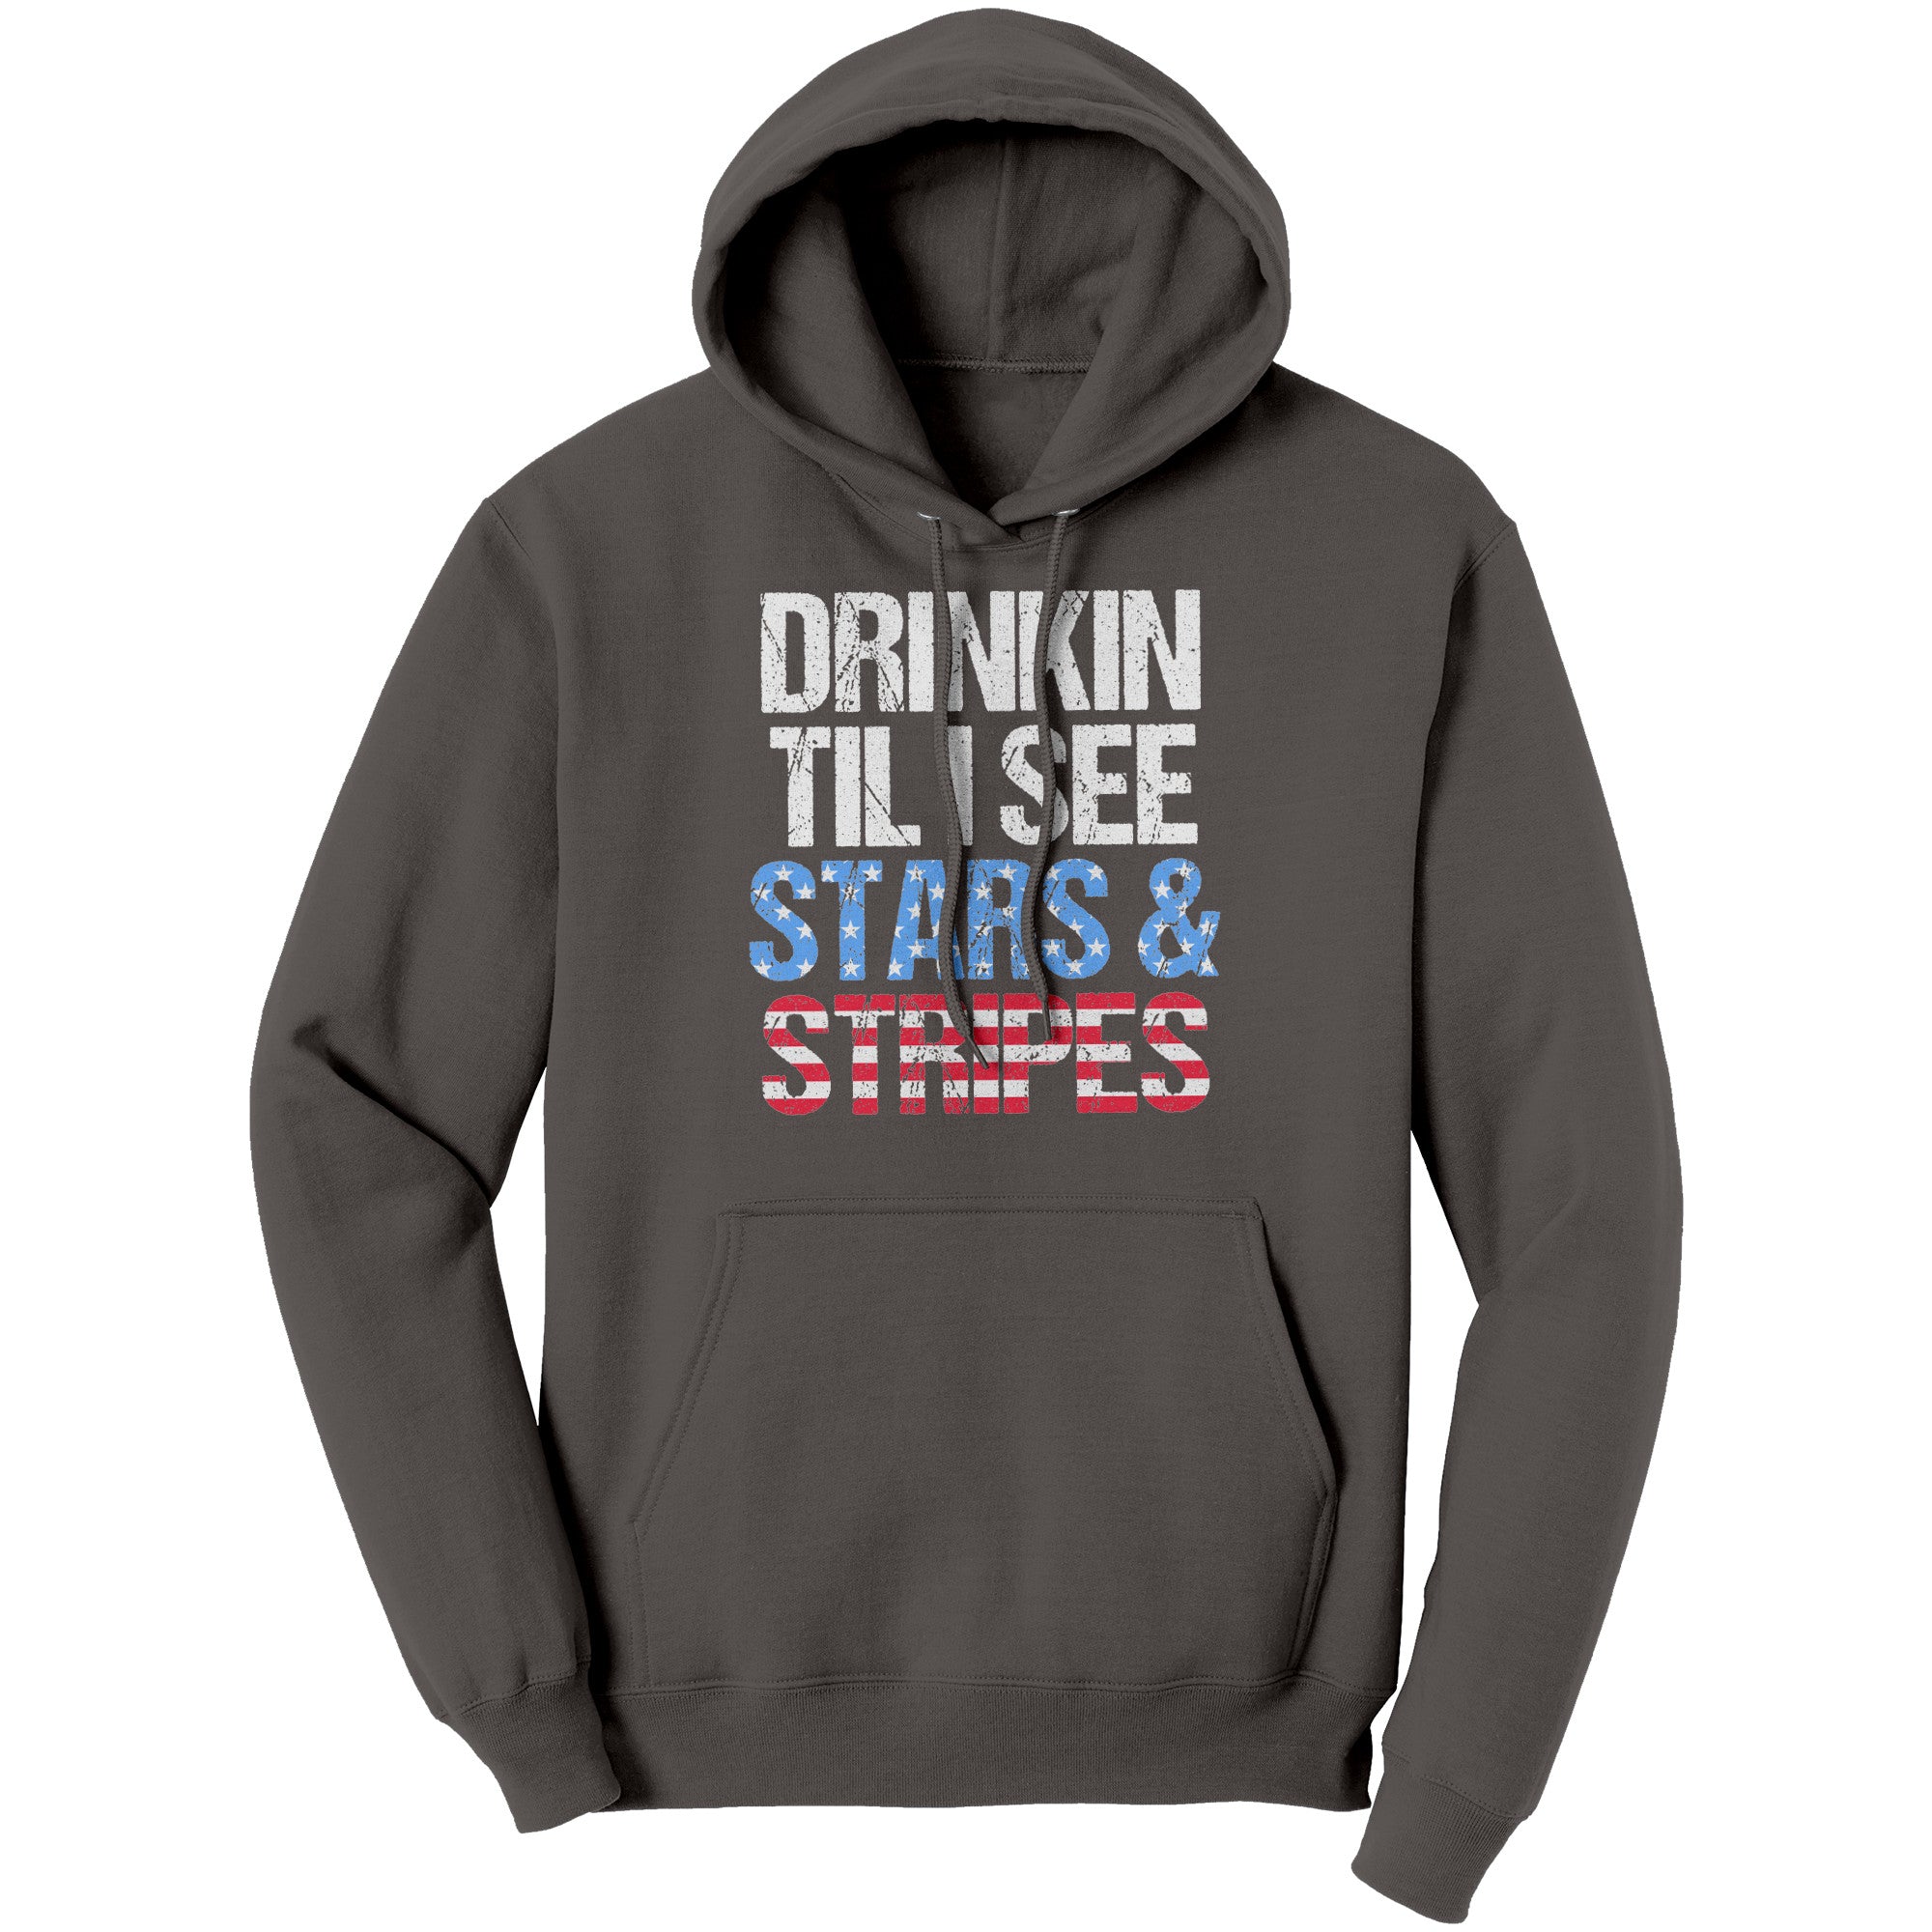 Drinking Til I See Stars & Stripes -Apparel | Drunk America 